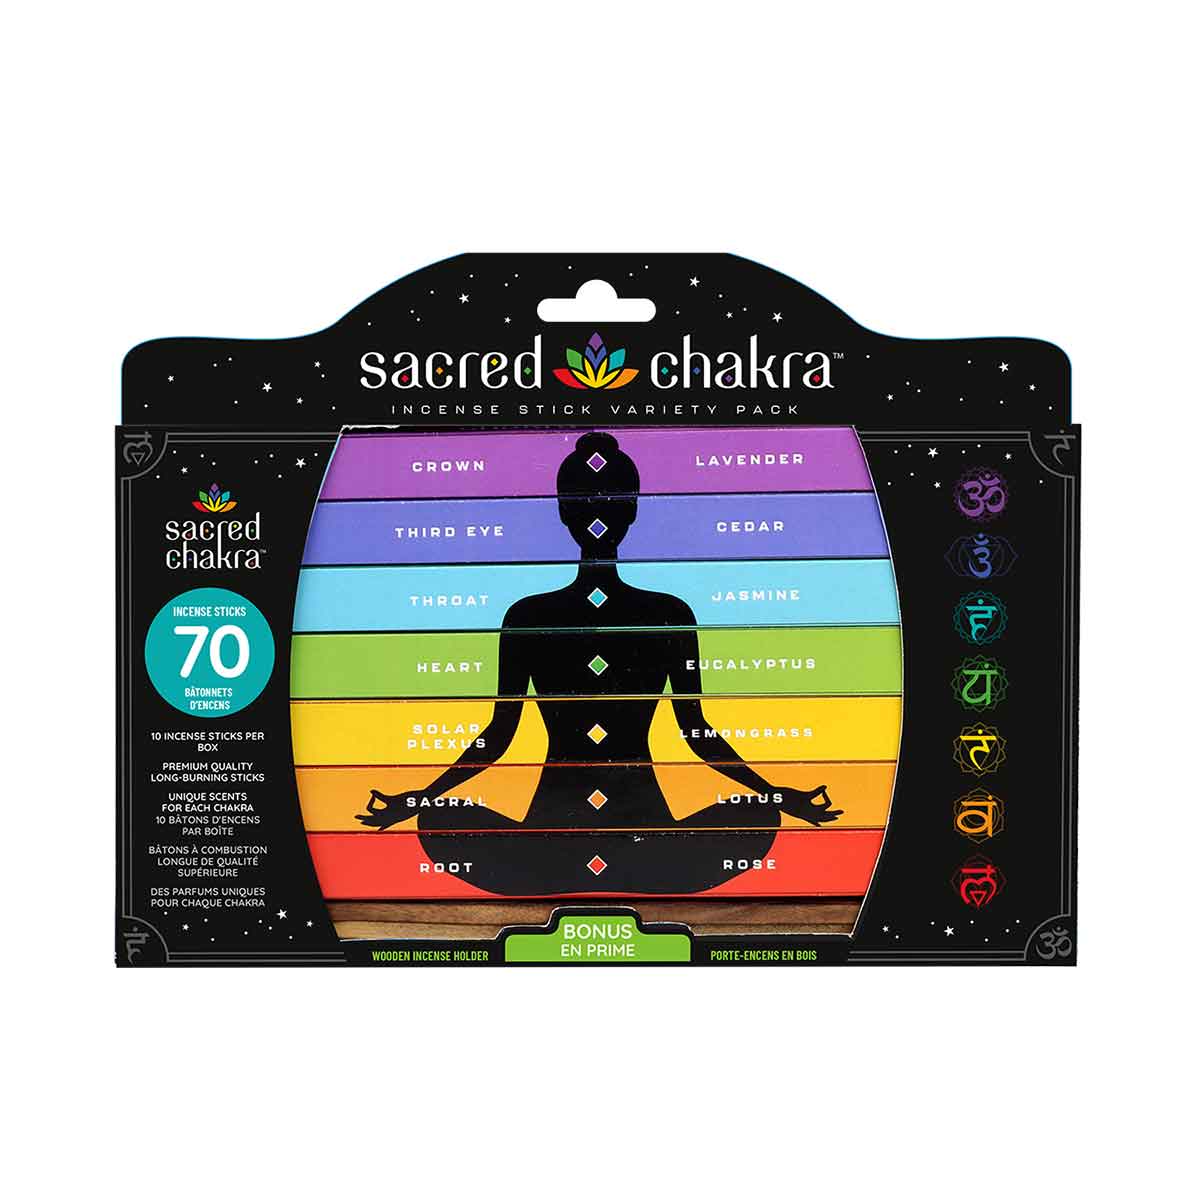 Wholesale Sacred Chakra Incense Sticks & Holder Variety Pack (6-pack)